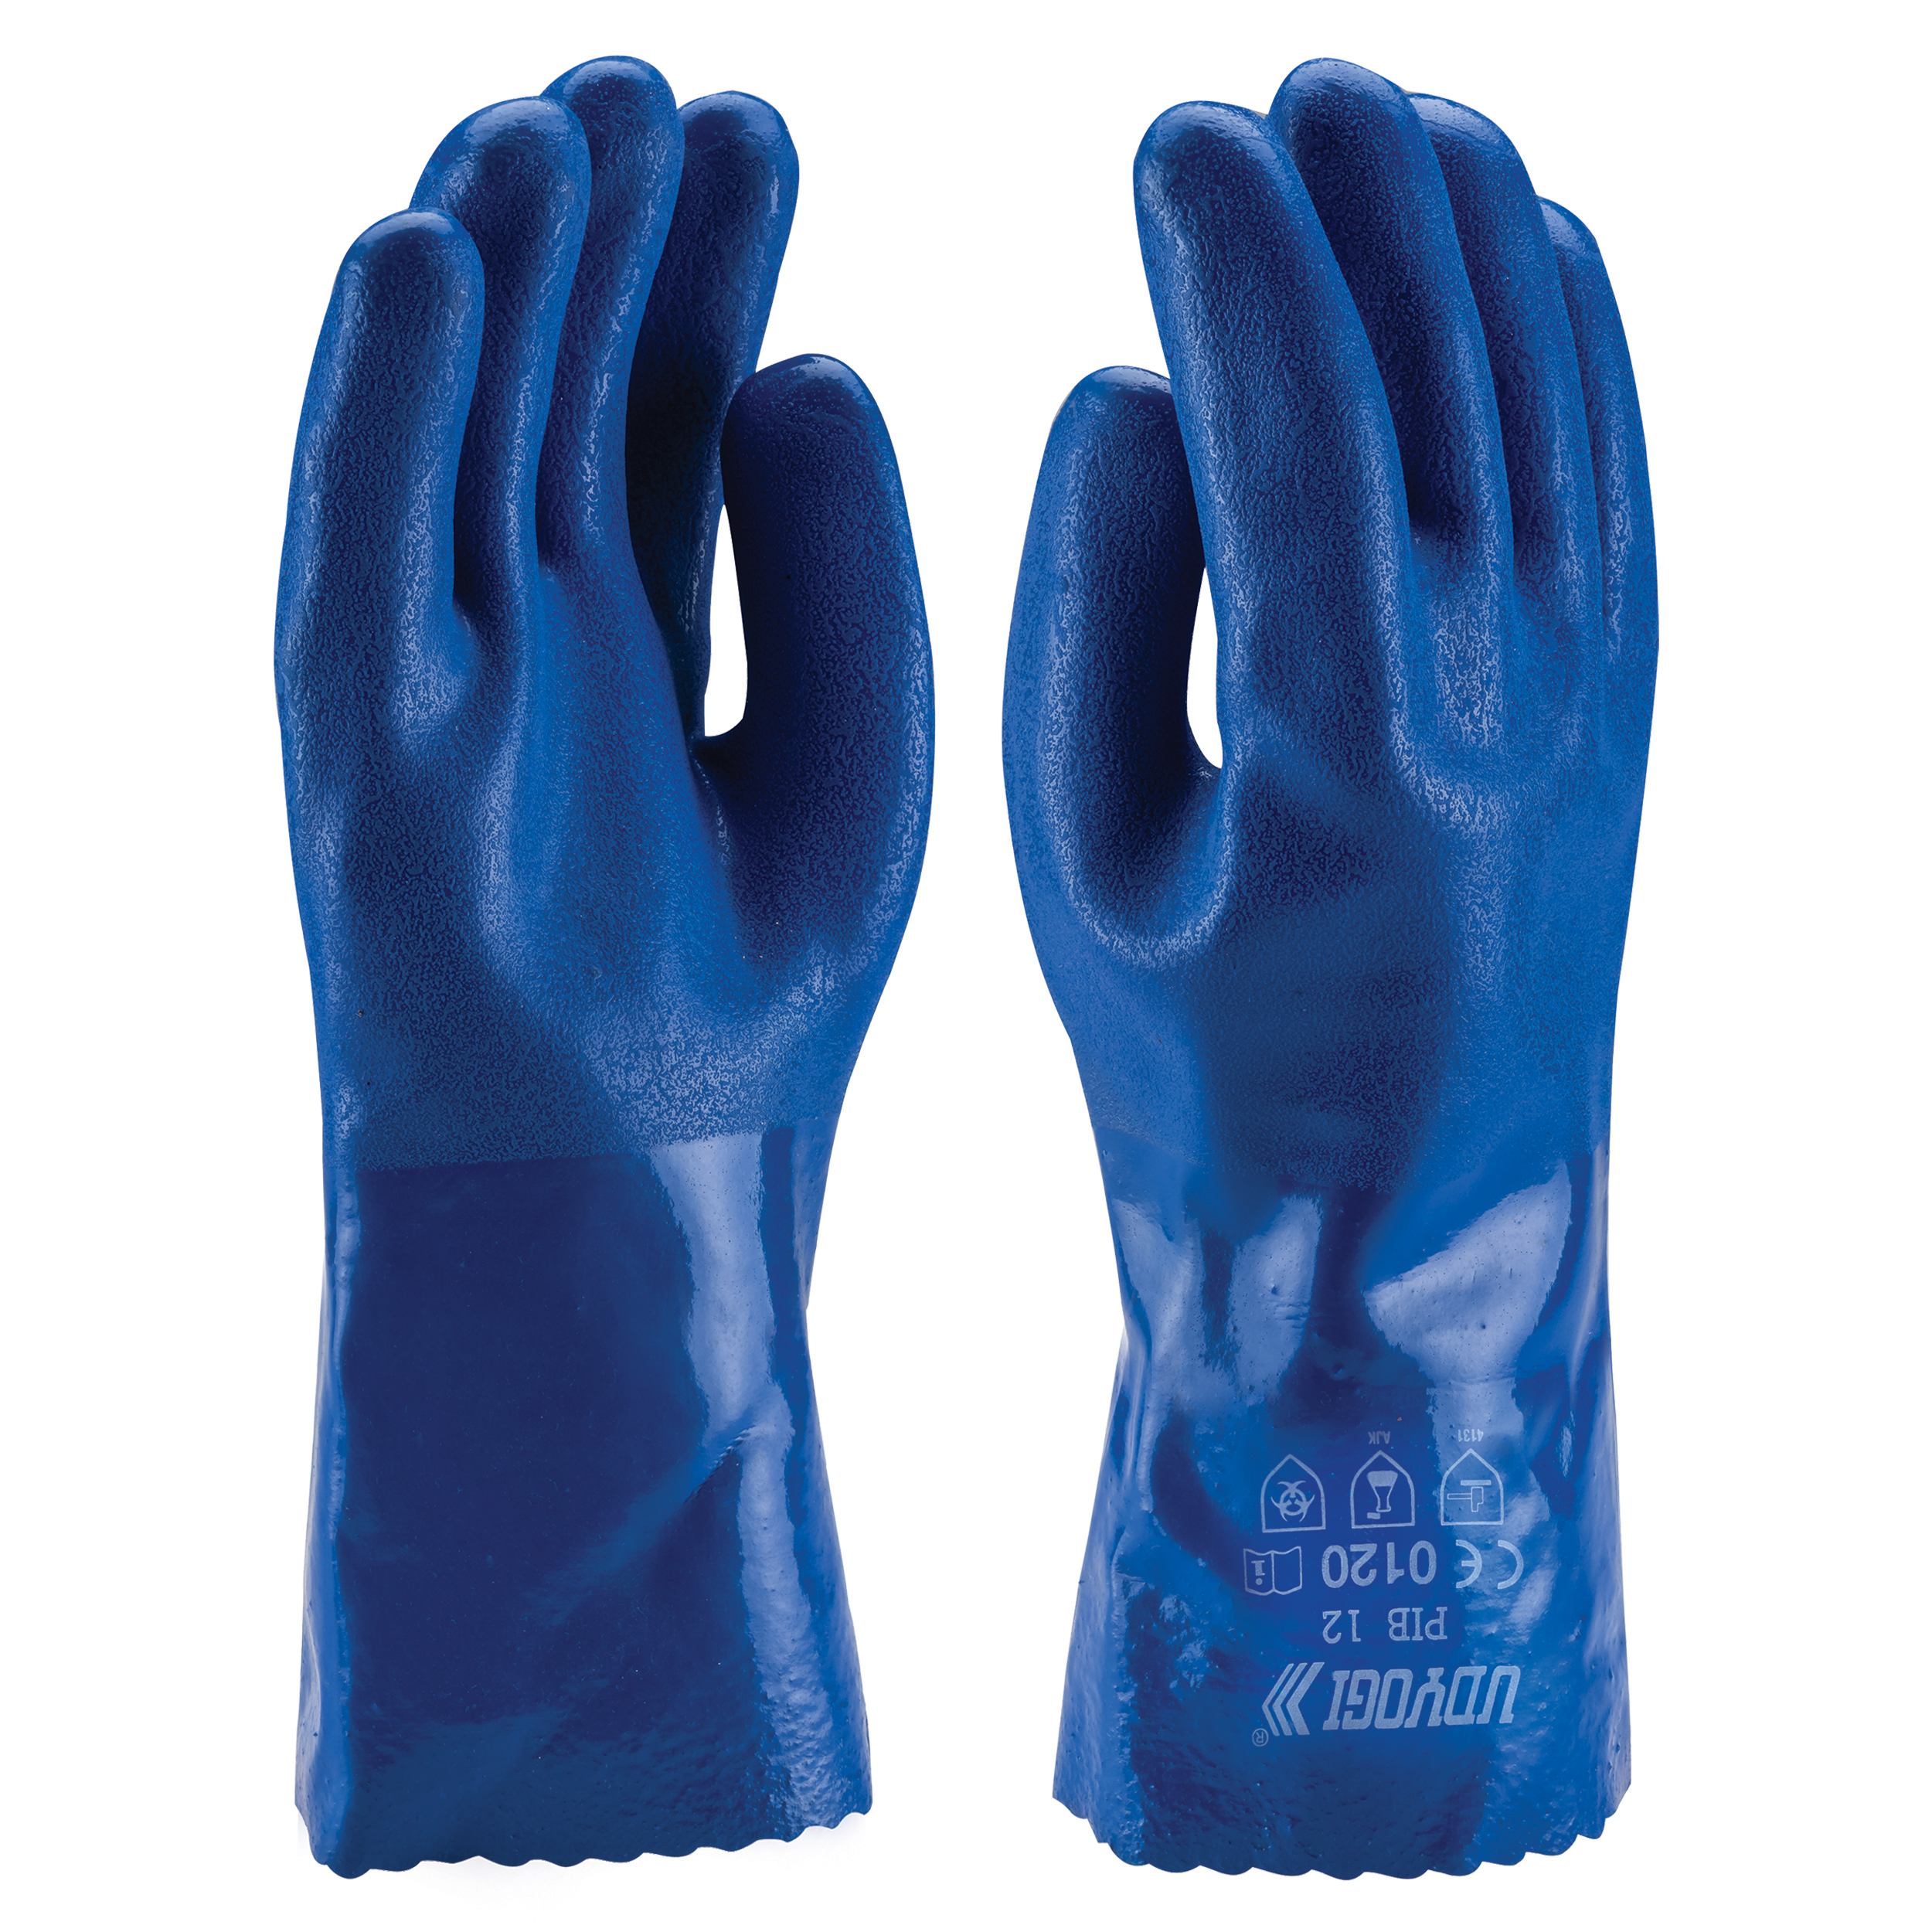 PVC Gloves - PIB12